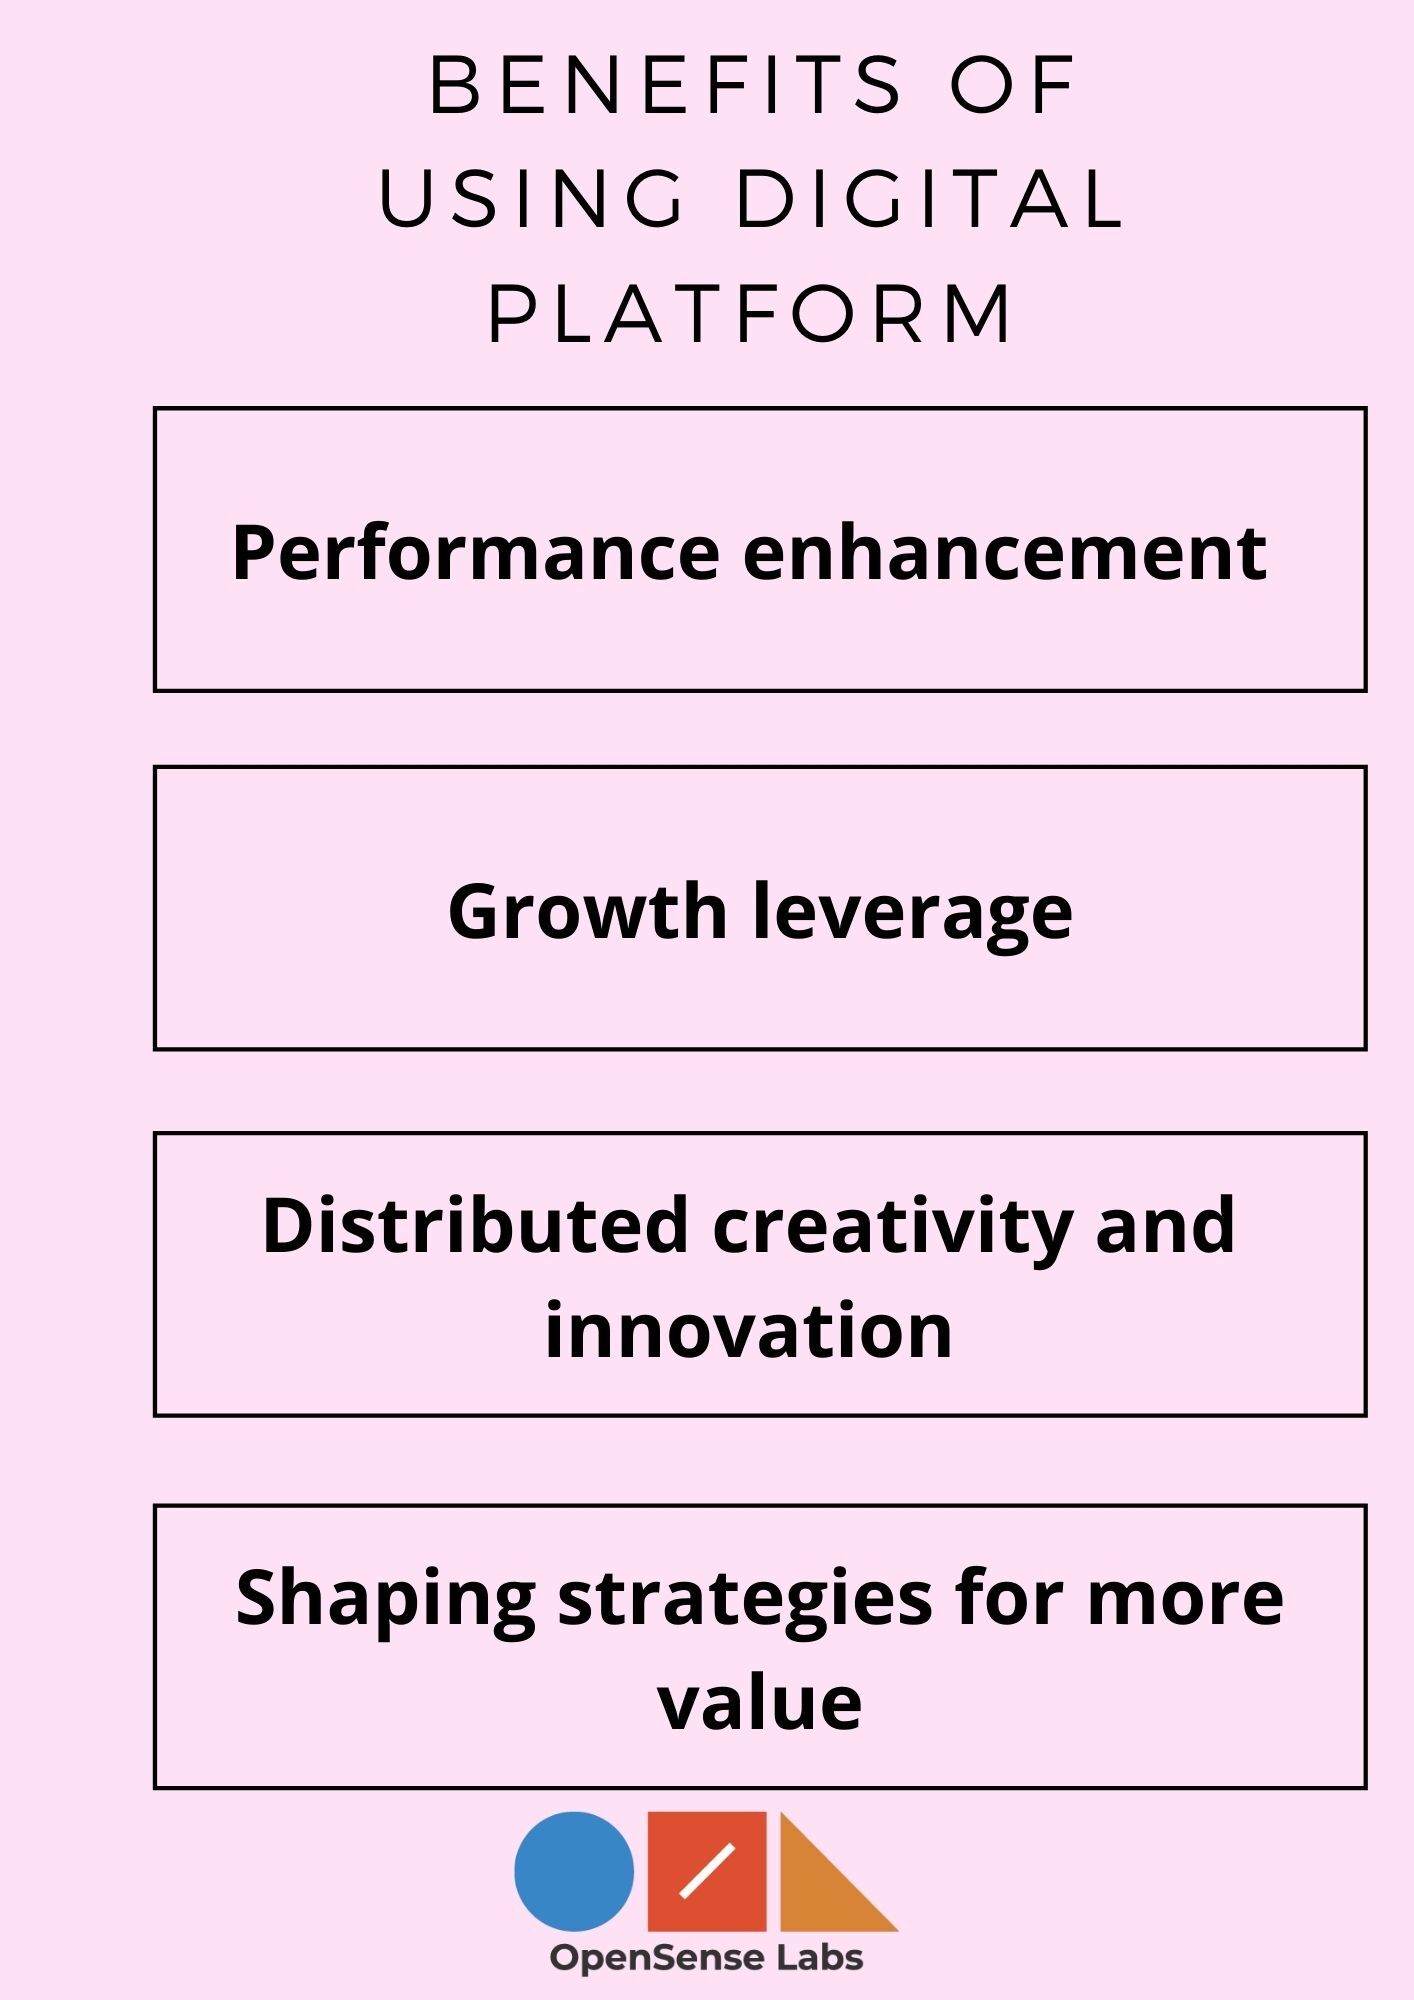 Illustration diagram describing the benefits of using digital platform